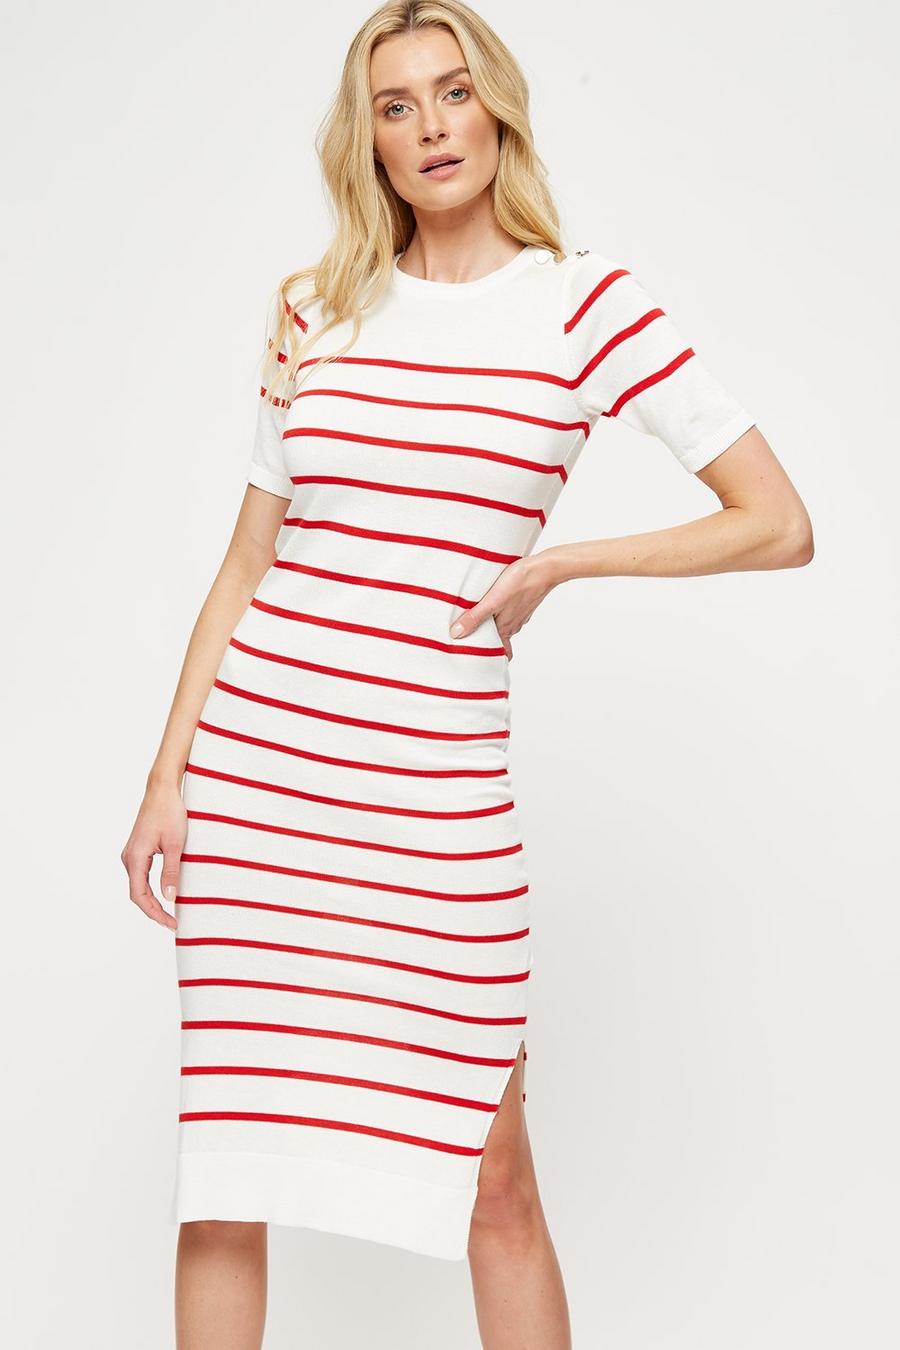 Ivory Red Stripe Dress